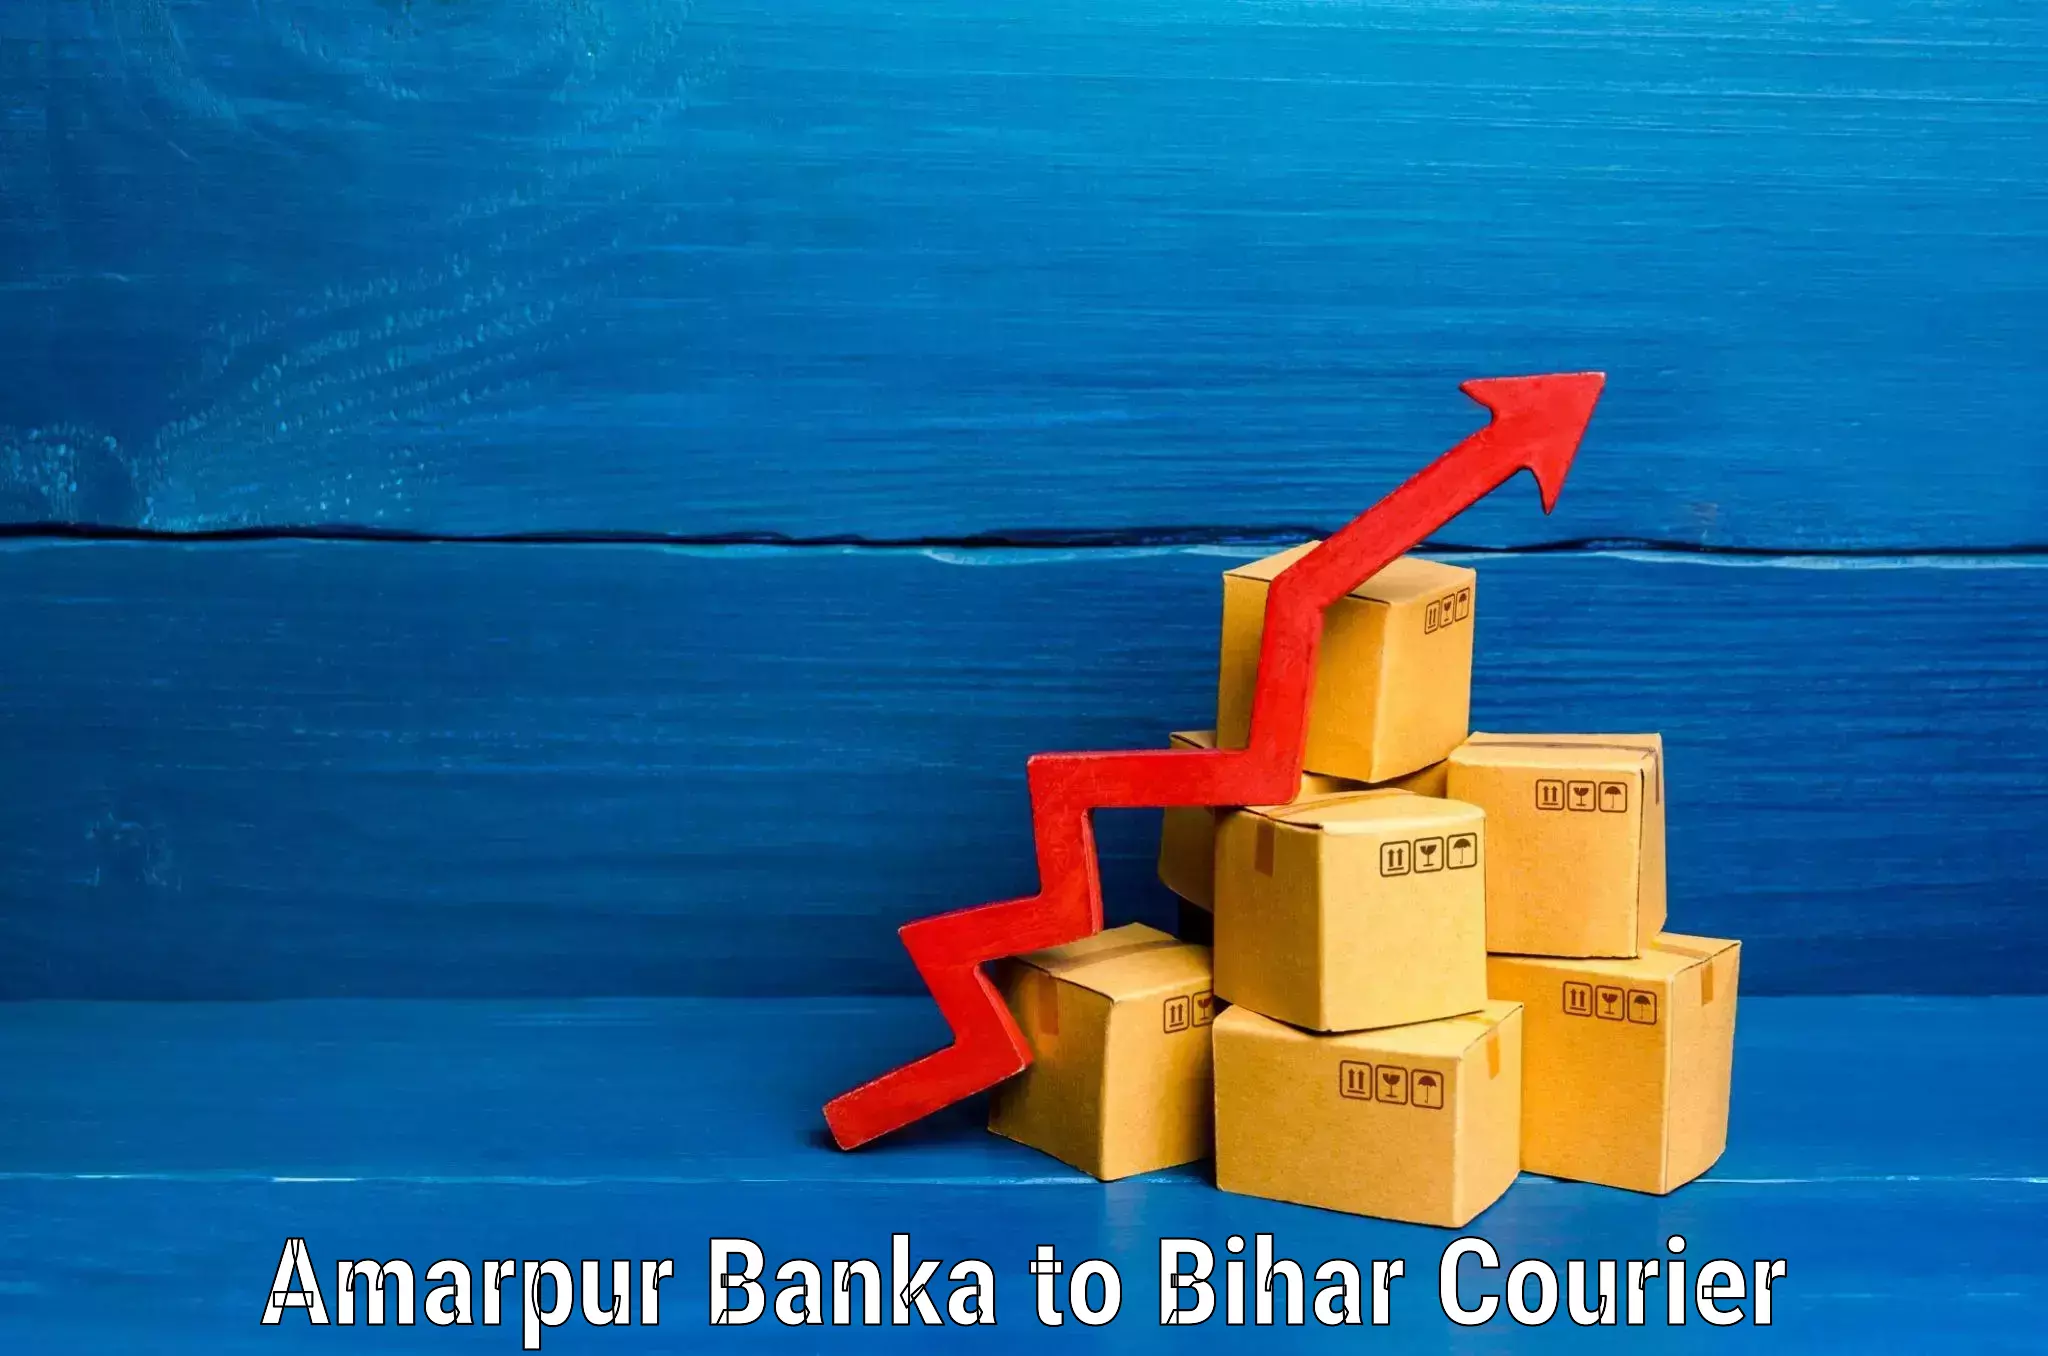 Baggage transport management Amarpur Banka to Bihar